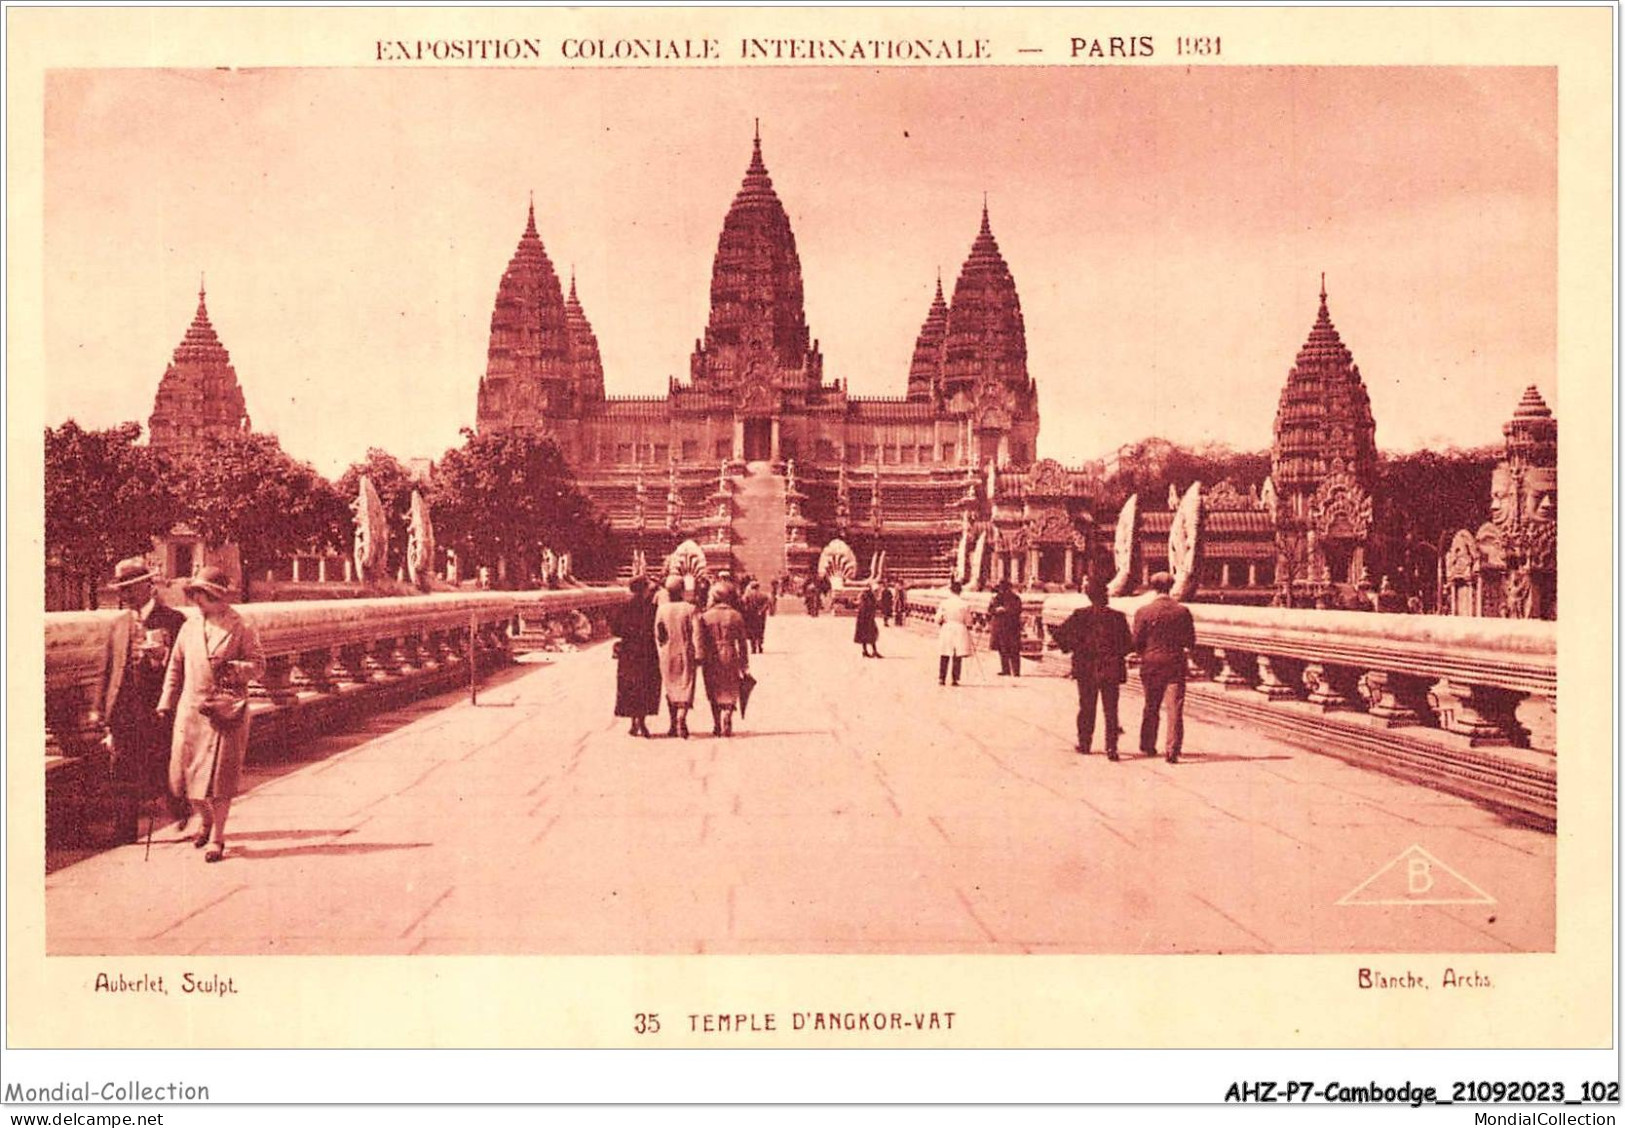 AHZP7-CAMBODGE-0647 - EXPOSITION COLONIALE INTERNATIONALE - PARIS 1931 - TEMPLE D'ANGKOR-VAT - Cambodge